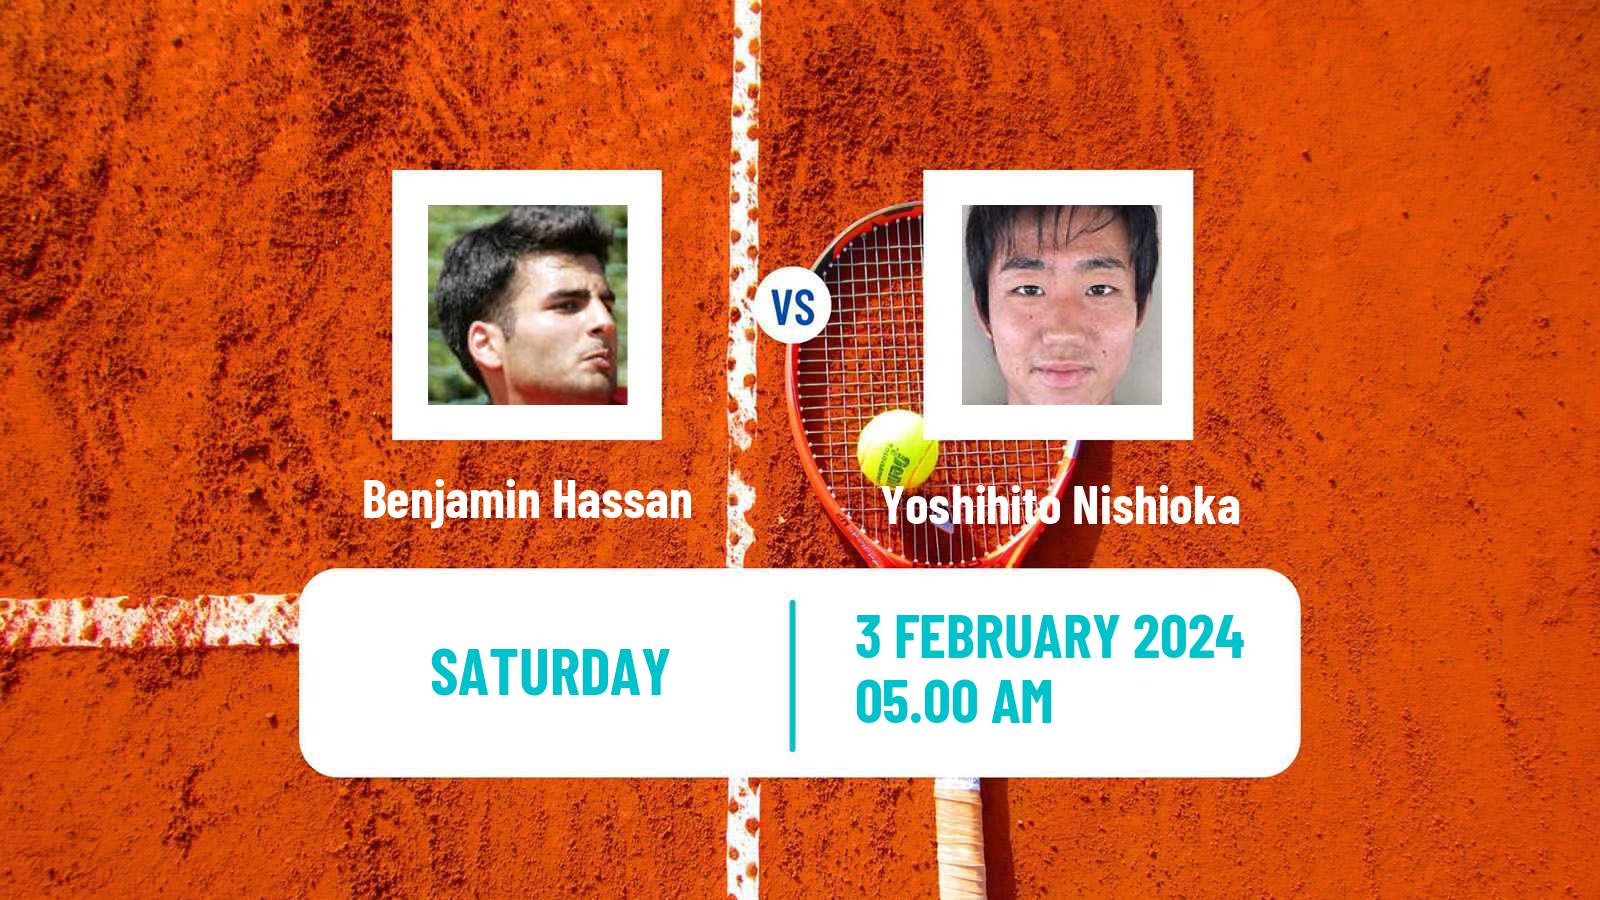 Tennis Davis Cup World Group I Benjamin Hassan - Yoshihito Nishioka